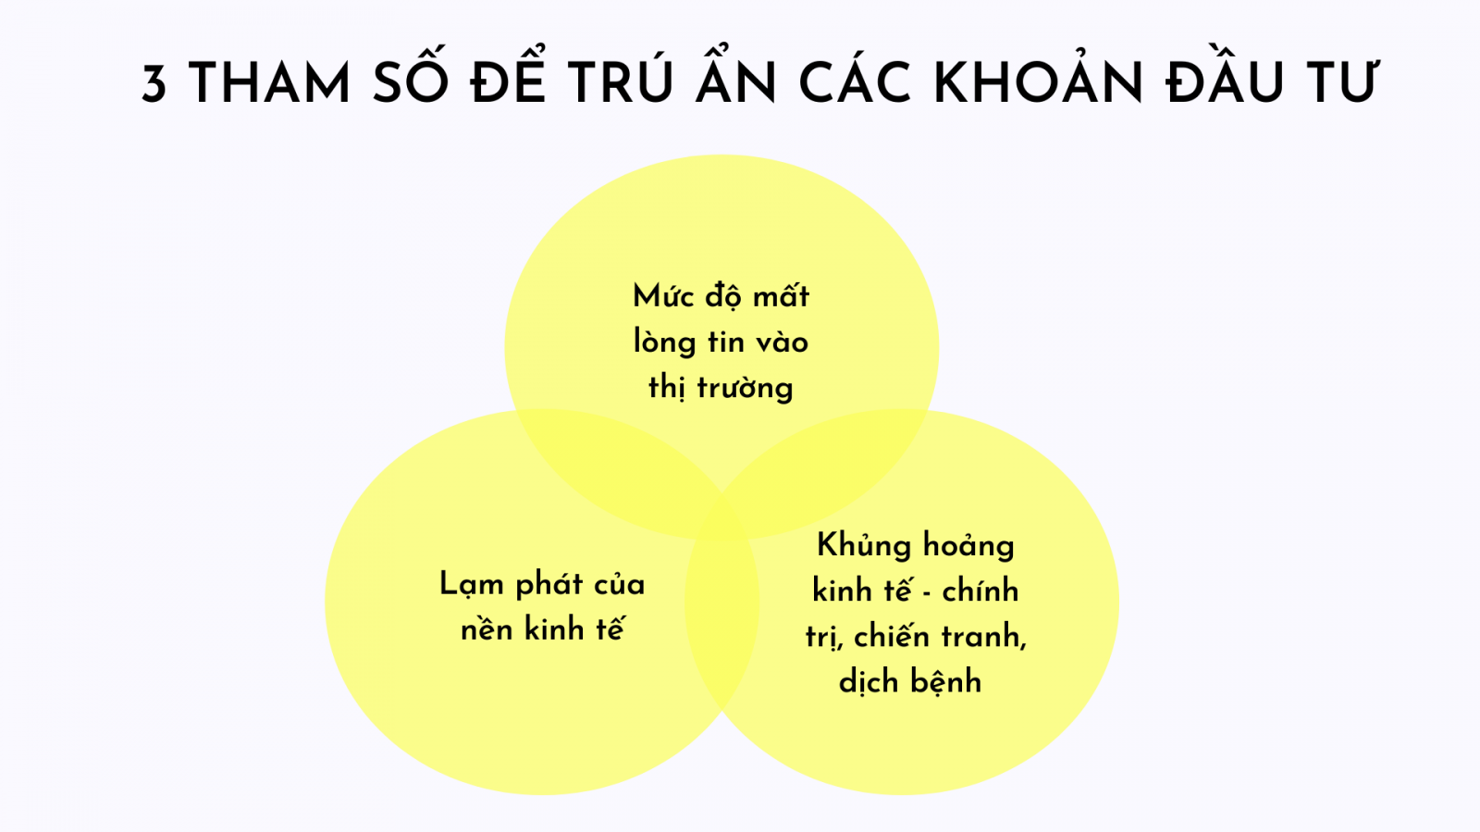 (Nguồn: Savills Việt Nam)